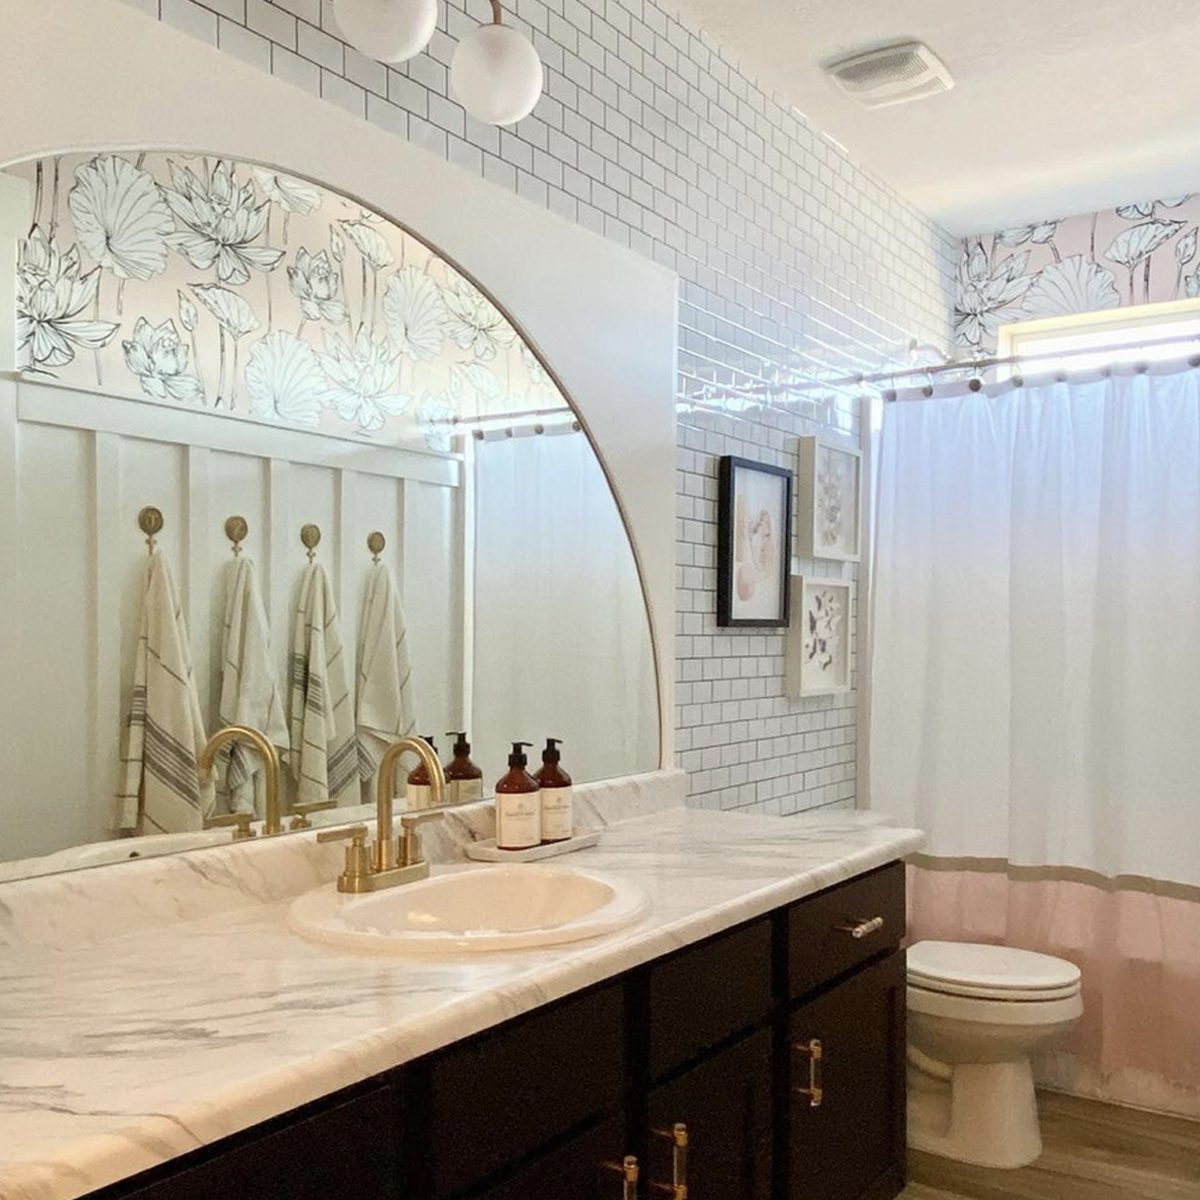 DIY Arched Bathroom Mirror Courtesy Functional Decor Instagram